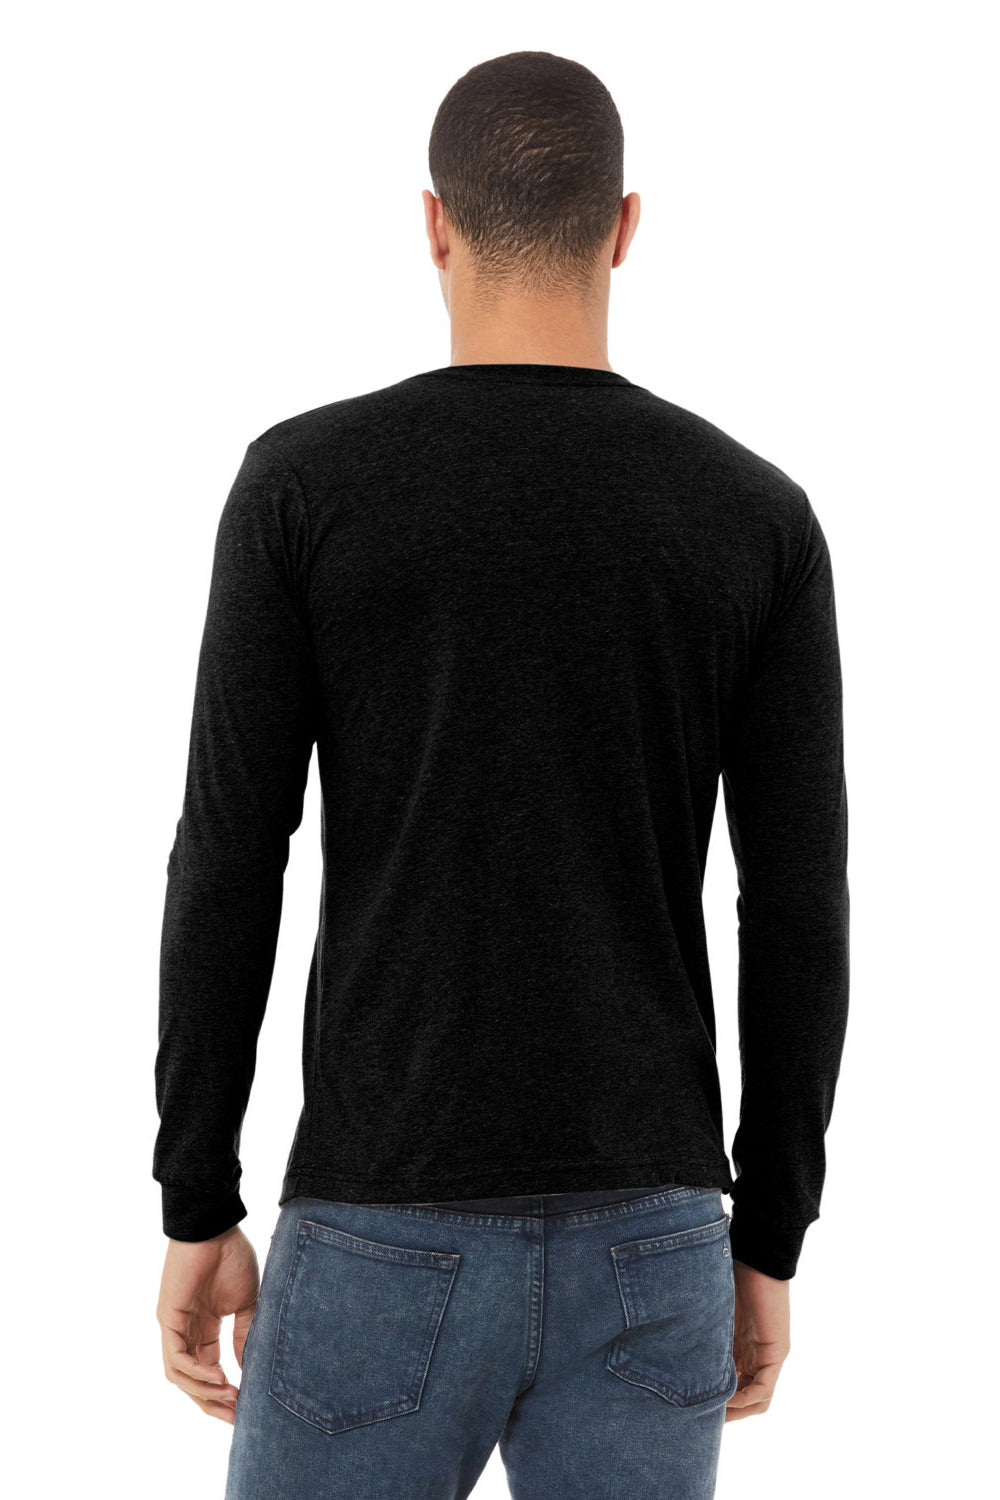 Bella + Canvas BC3501CVC Mens CVC Long Sleeve Crewneck T-Shirt Solid Black Model Back